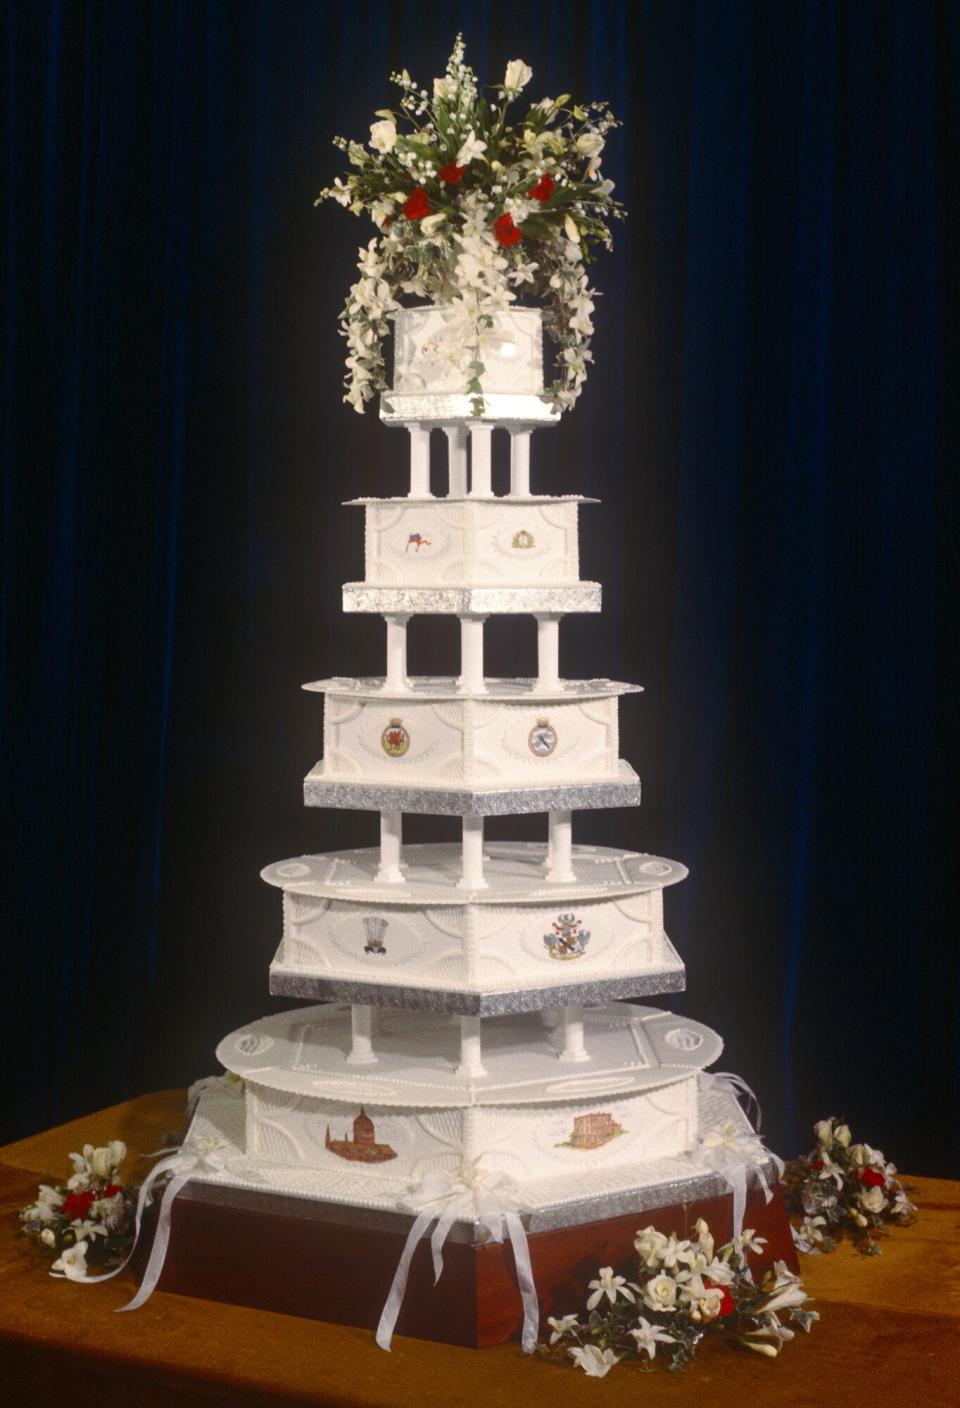 The wedding cake on display at Charles &amp; Diana Royal Wedding, 29th July 1981